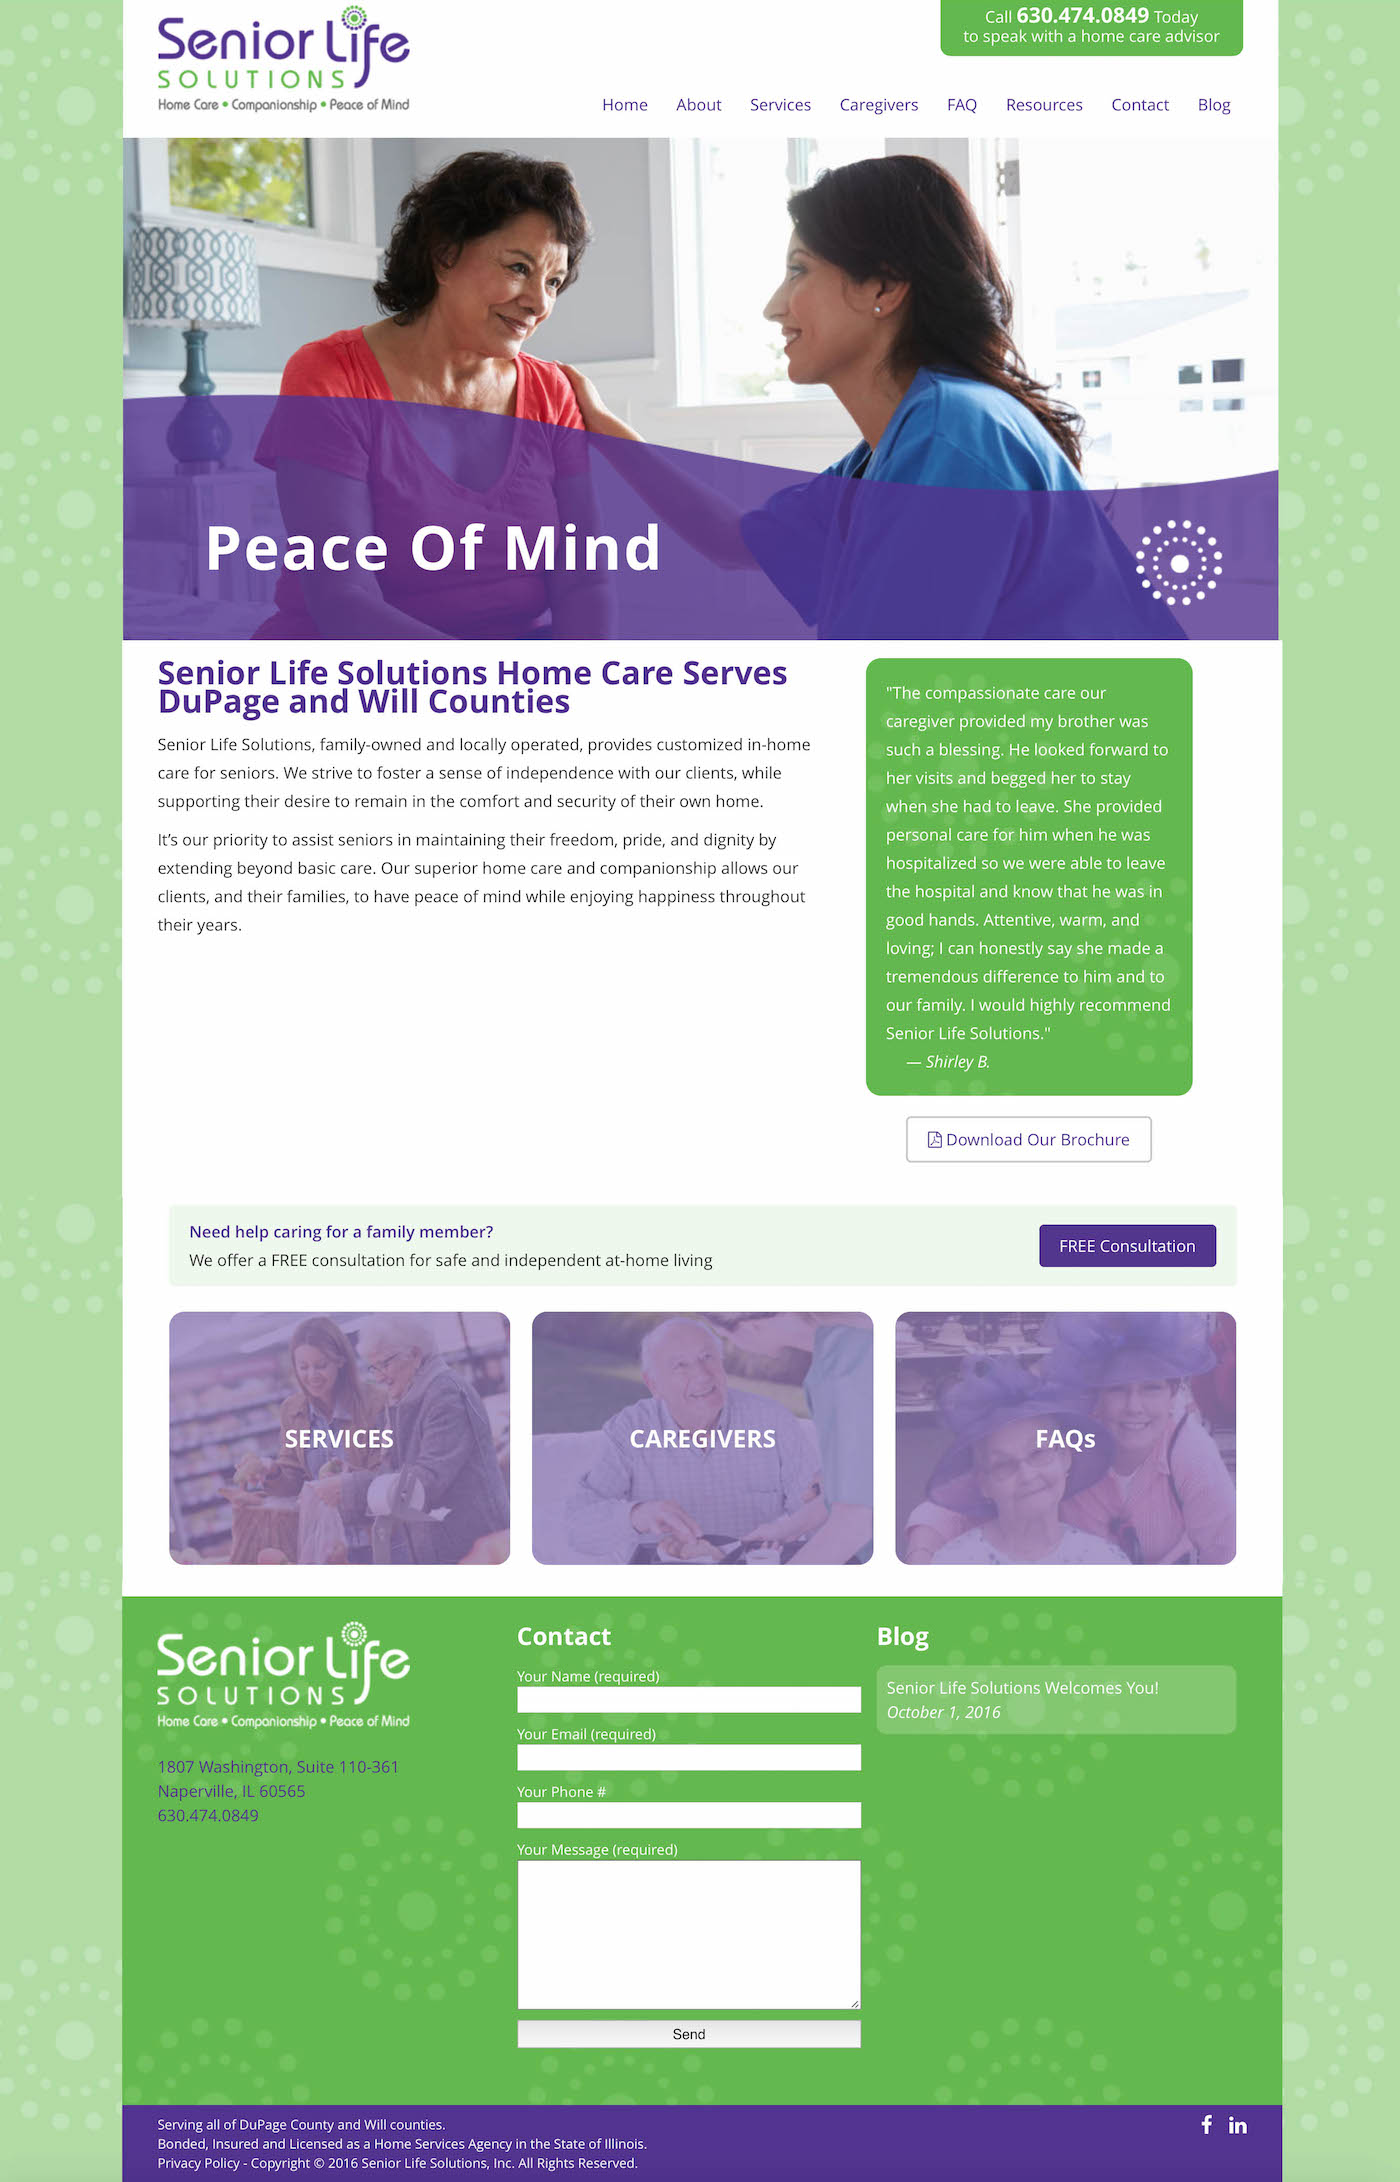 Naperville Web Design for Senior Life Solutions - web design & web development